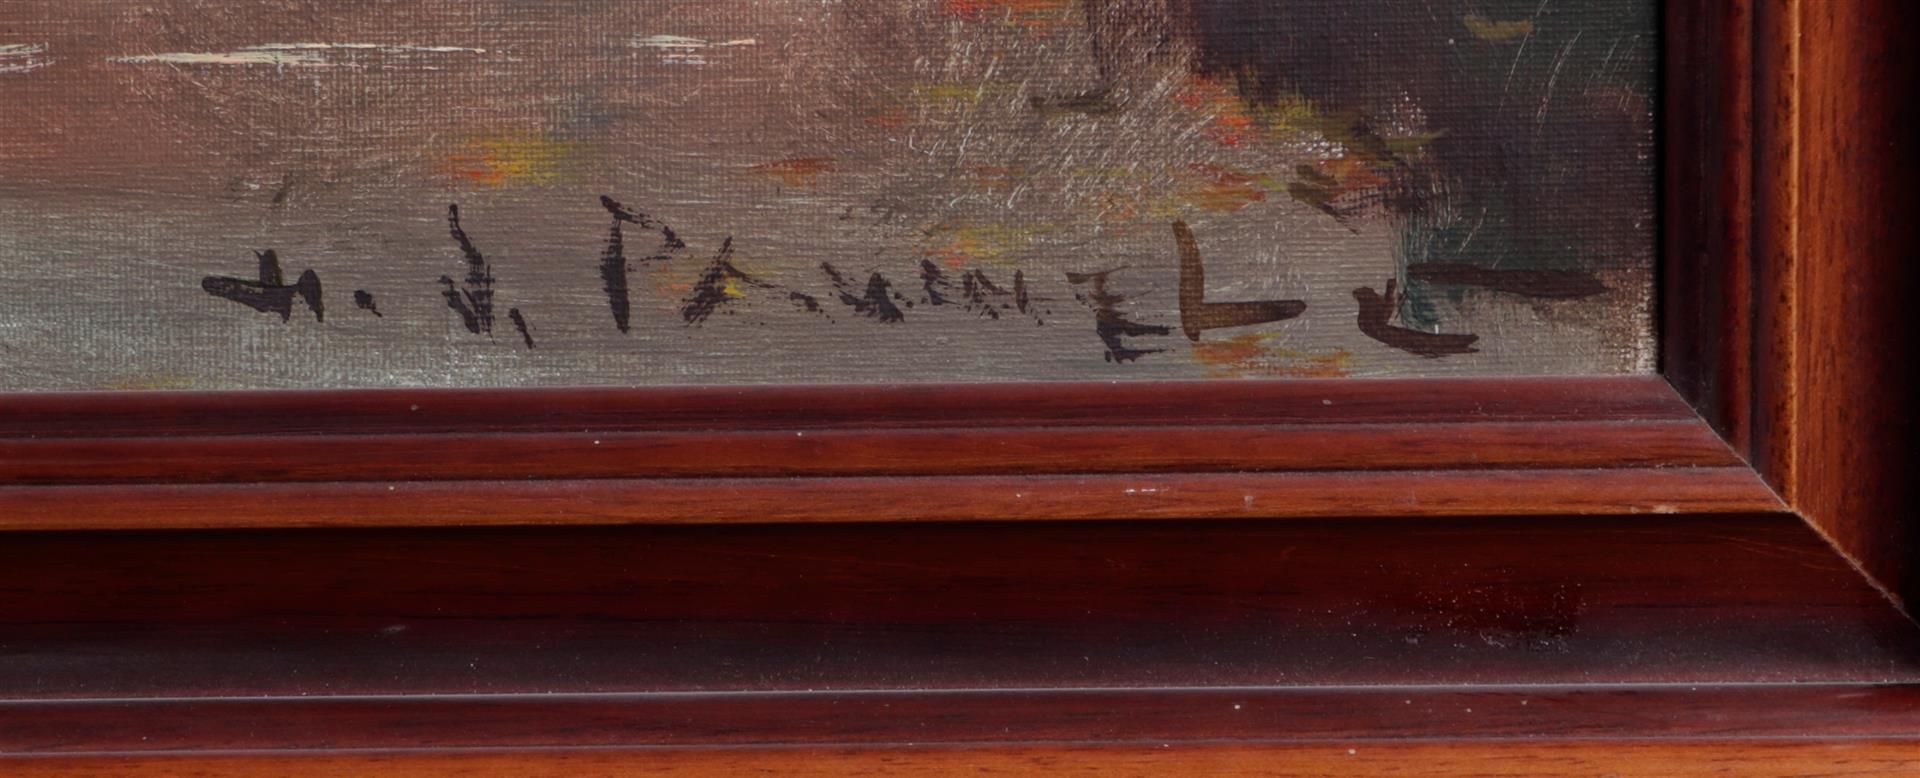 Henri Joseph Pauwels (1903 - 1983), Forrest lane, signed (lower right), oil on canvas,
65 x 85 cm. - Image 3 of 4